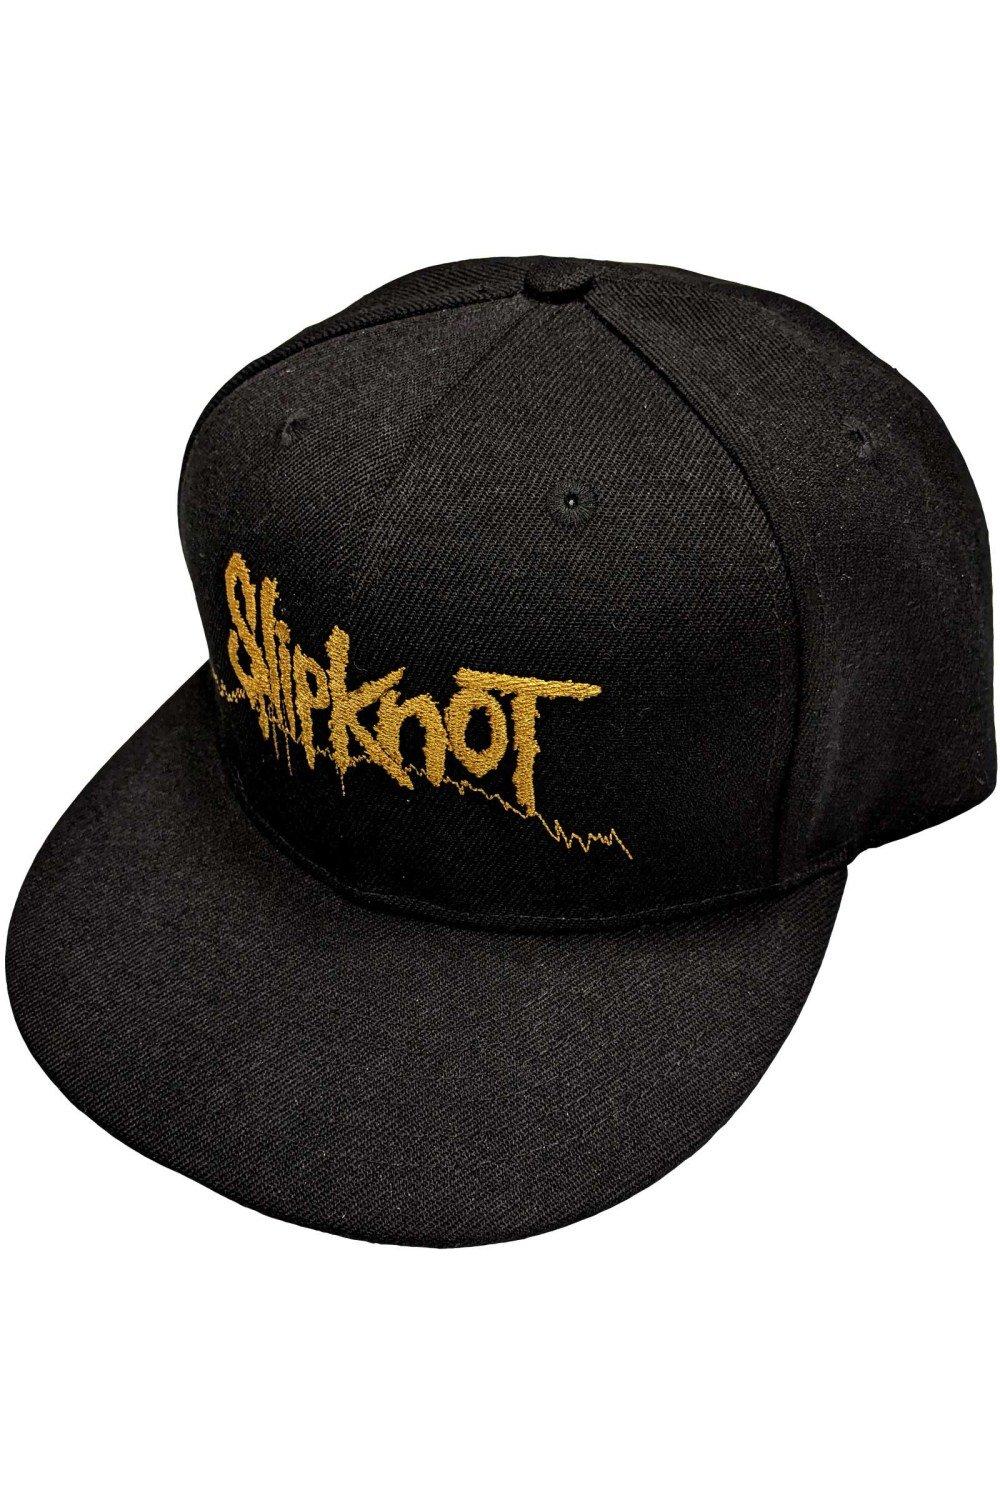 Кепка Snapback со штрих-кодом Slipknot, черный slipknot slipknot slipknot limited colour 180 gr